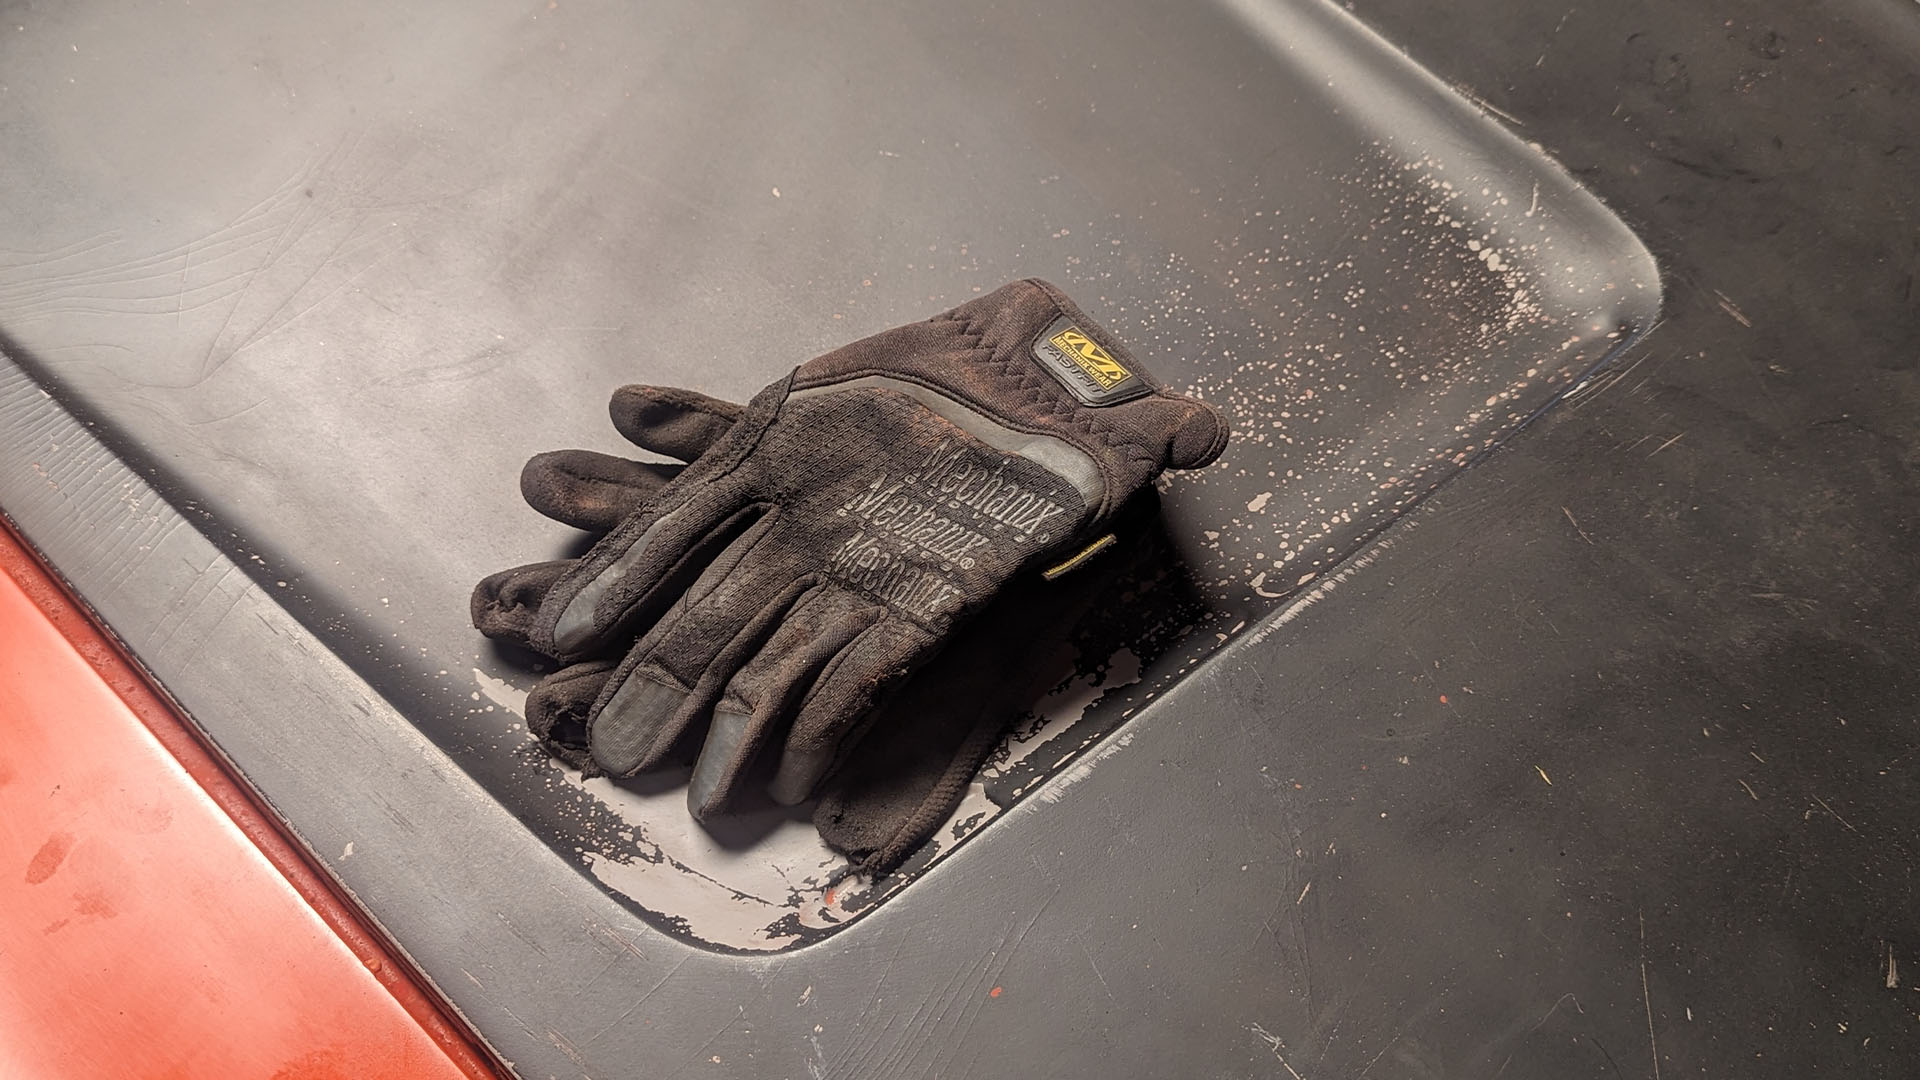 https://www.thedrive.com/uploads/2019/07/03/Best-Mechanics-Gloves.jpg?auto=webp